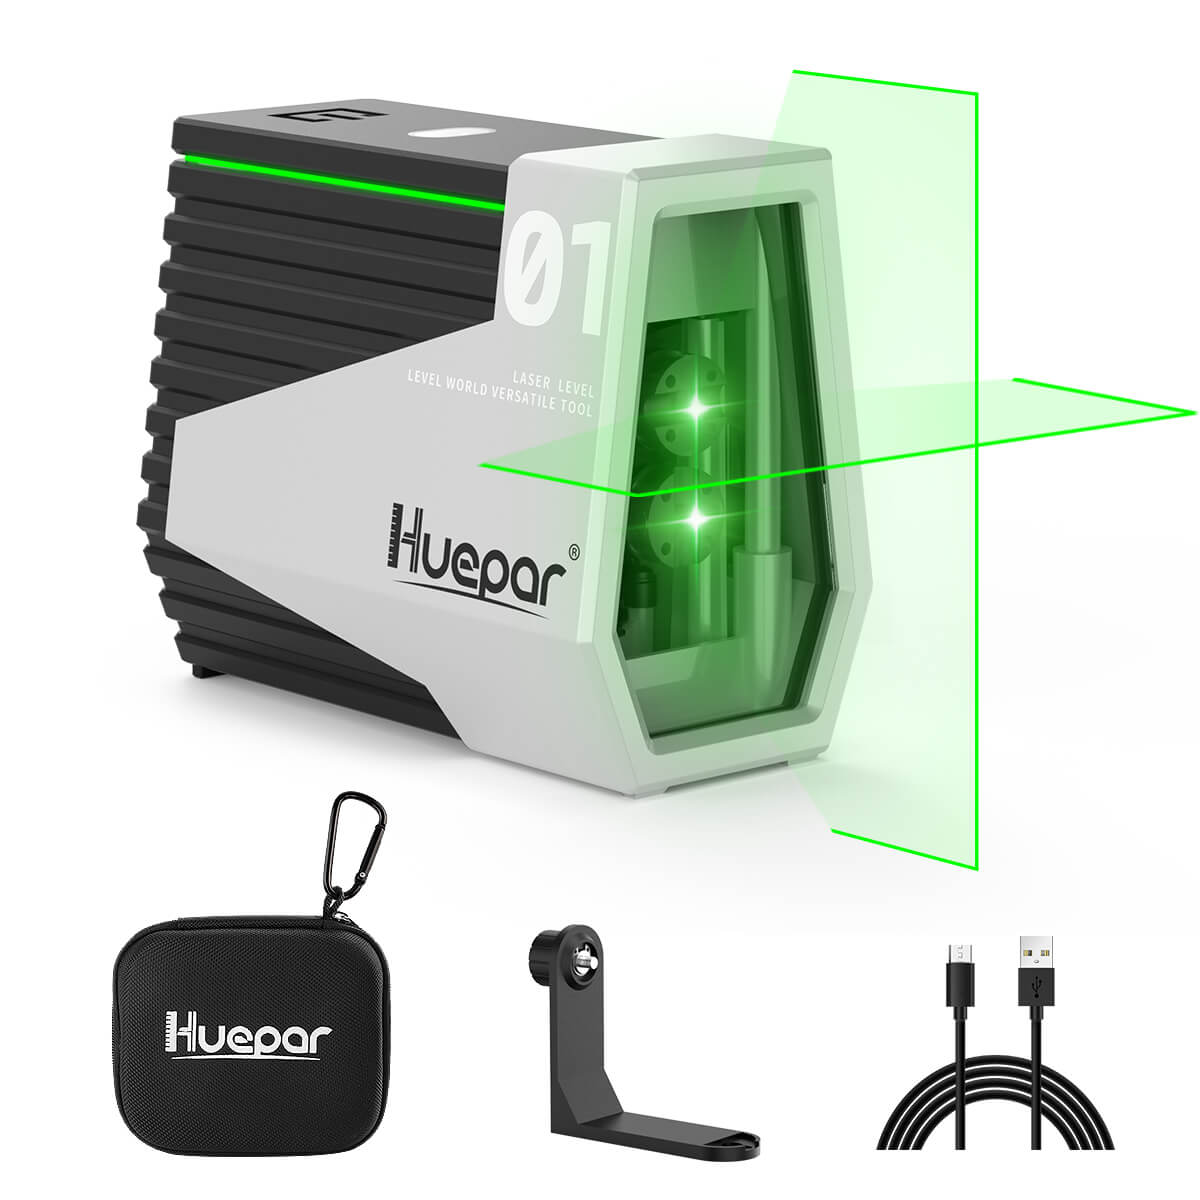 Huepar E011G - Green Beam Cross Line Self-leveling Laser Levels Tool with Motion Sensor & Li-ion Battery